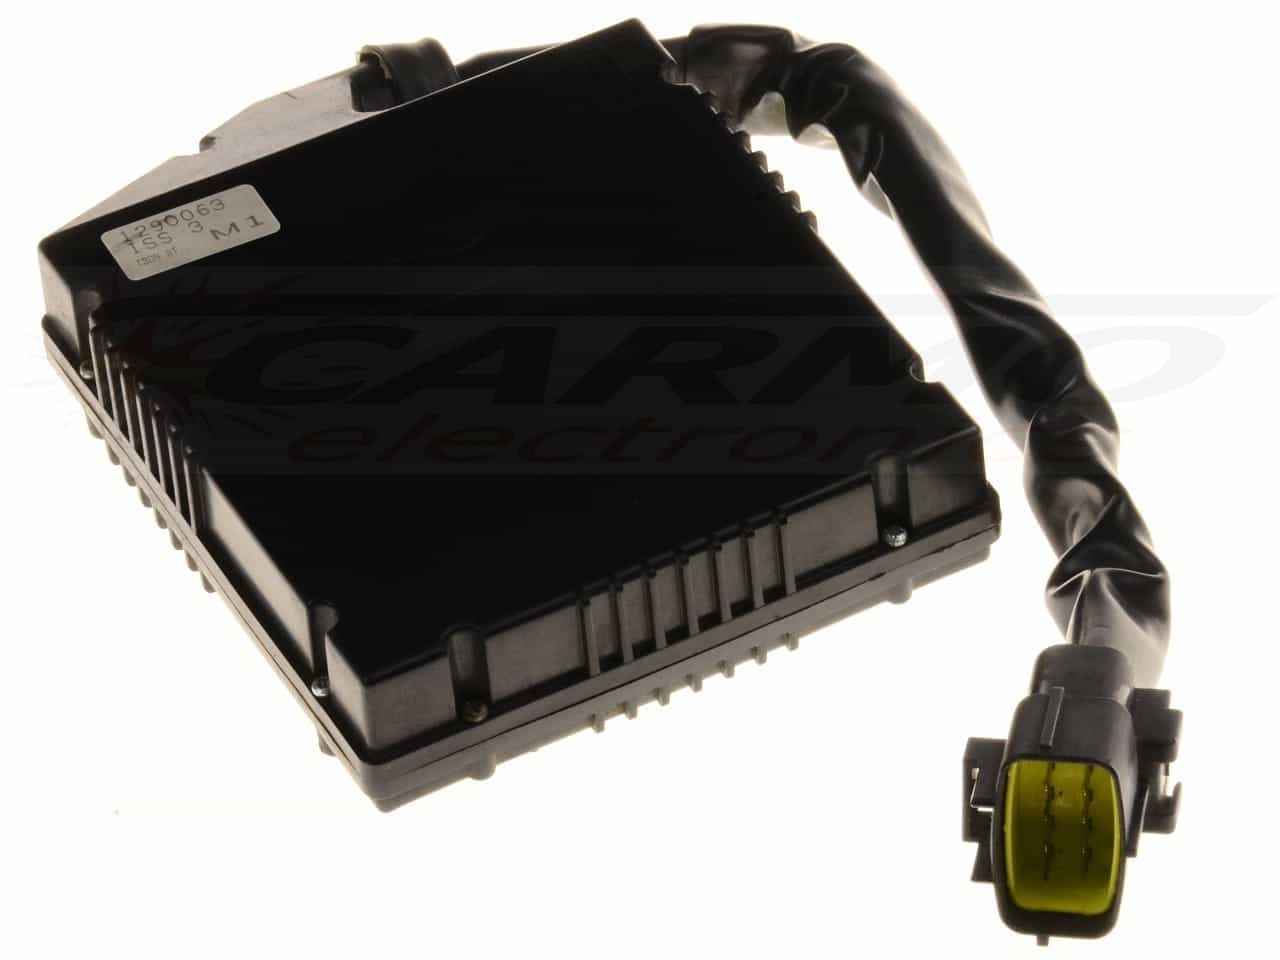 Sprint 900 TCI CDI dispositif de commande boîte noire (GILL 1290004)